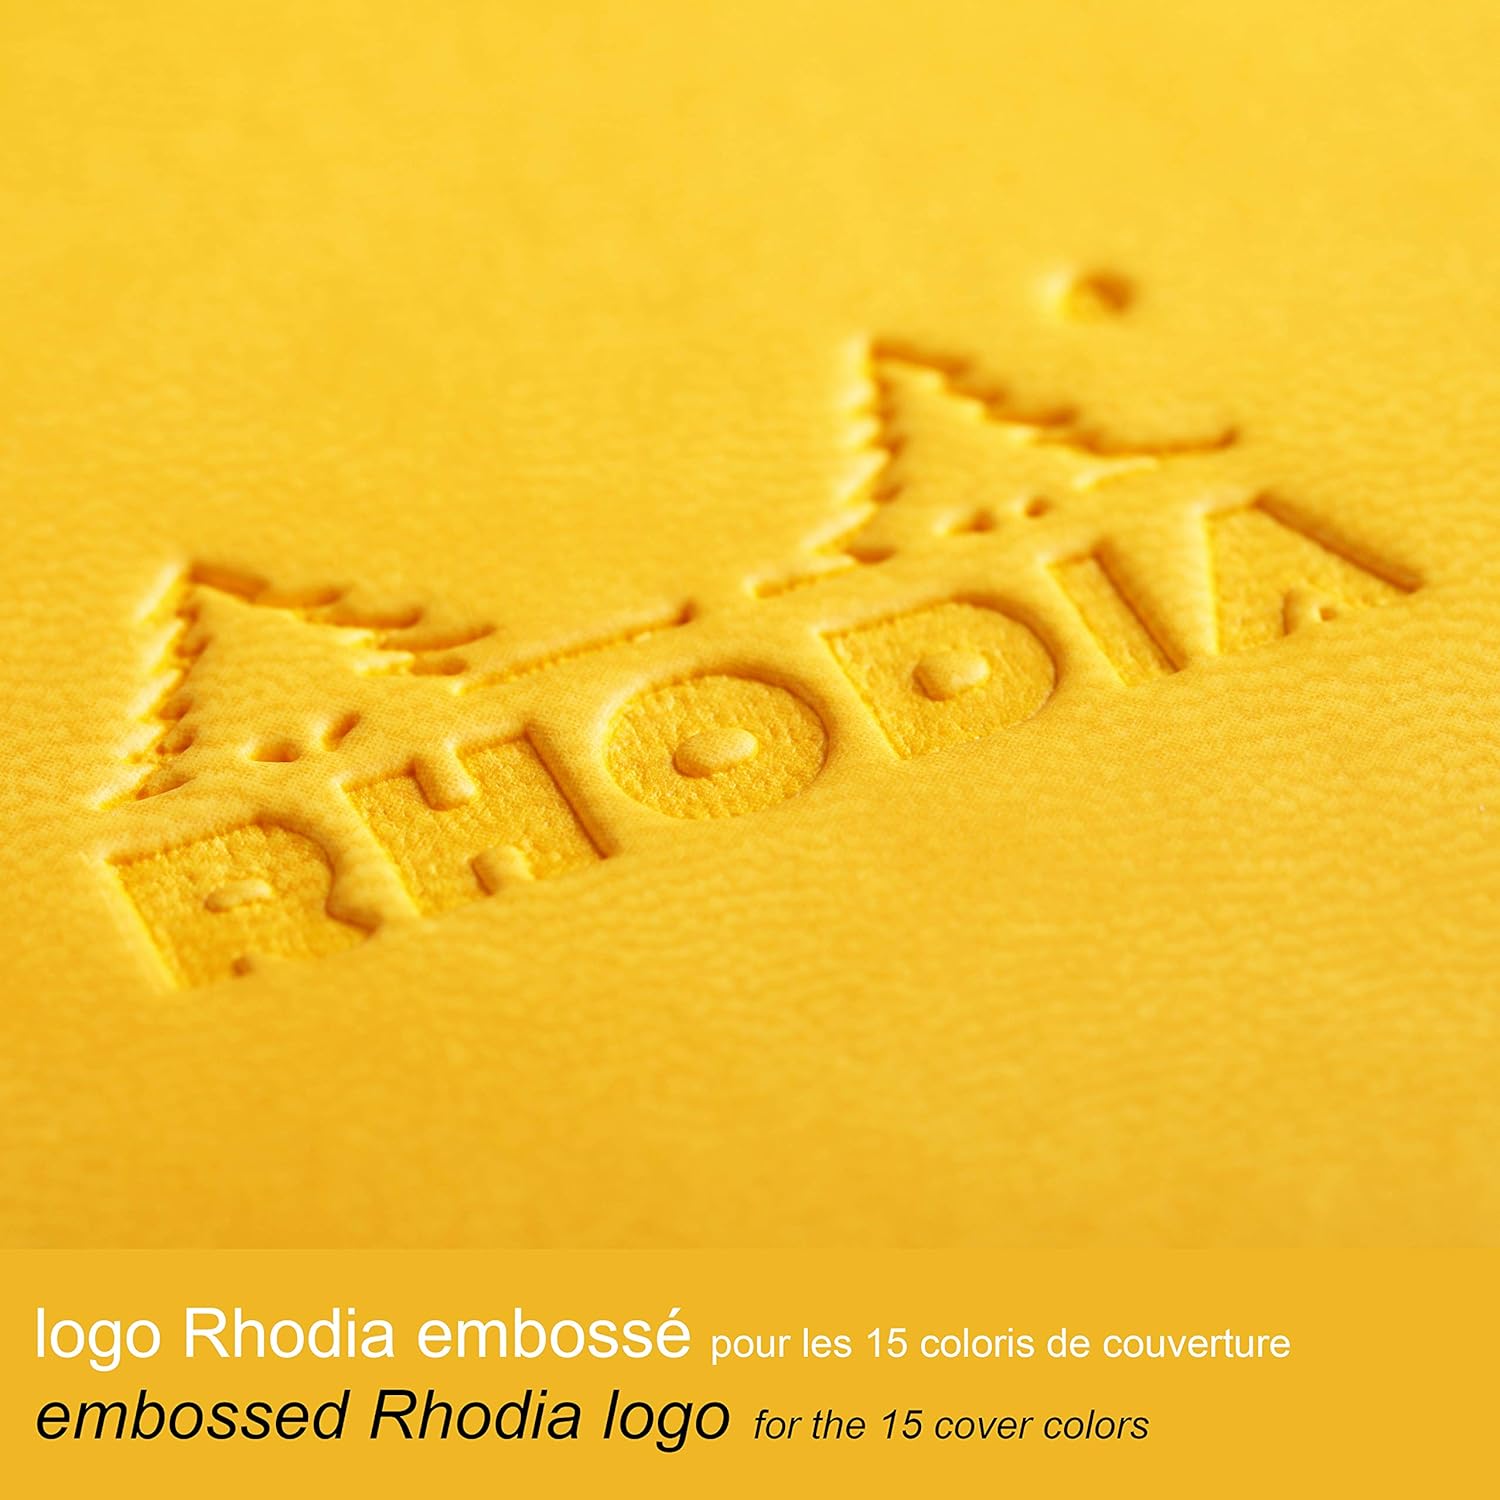 RHODIArama Webnotebook A6 Ivory Plain Hardcover-Daffodil Yellow